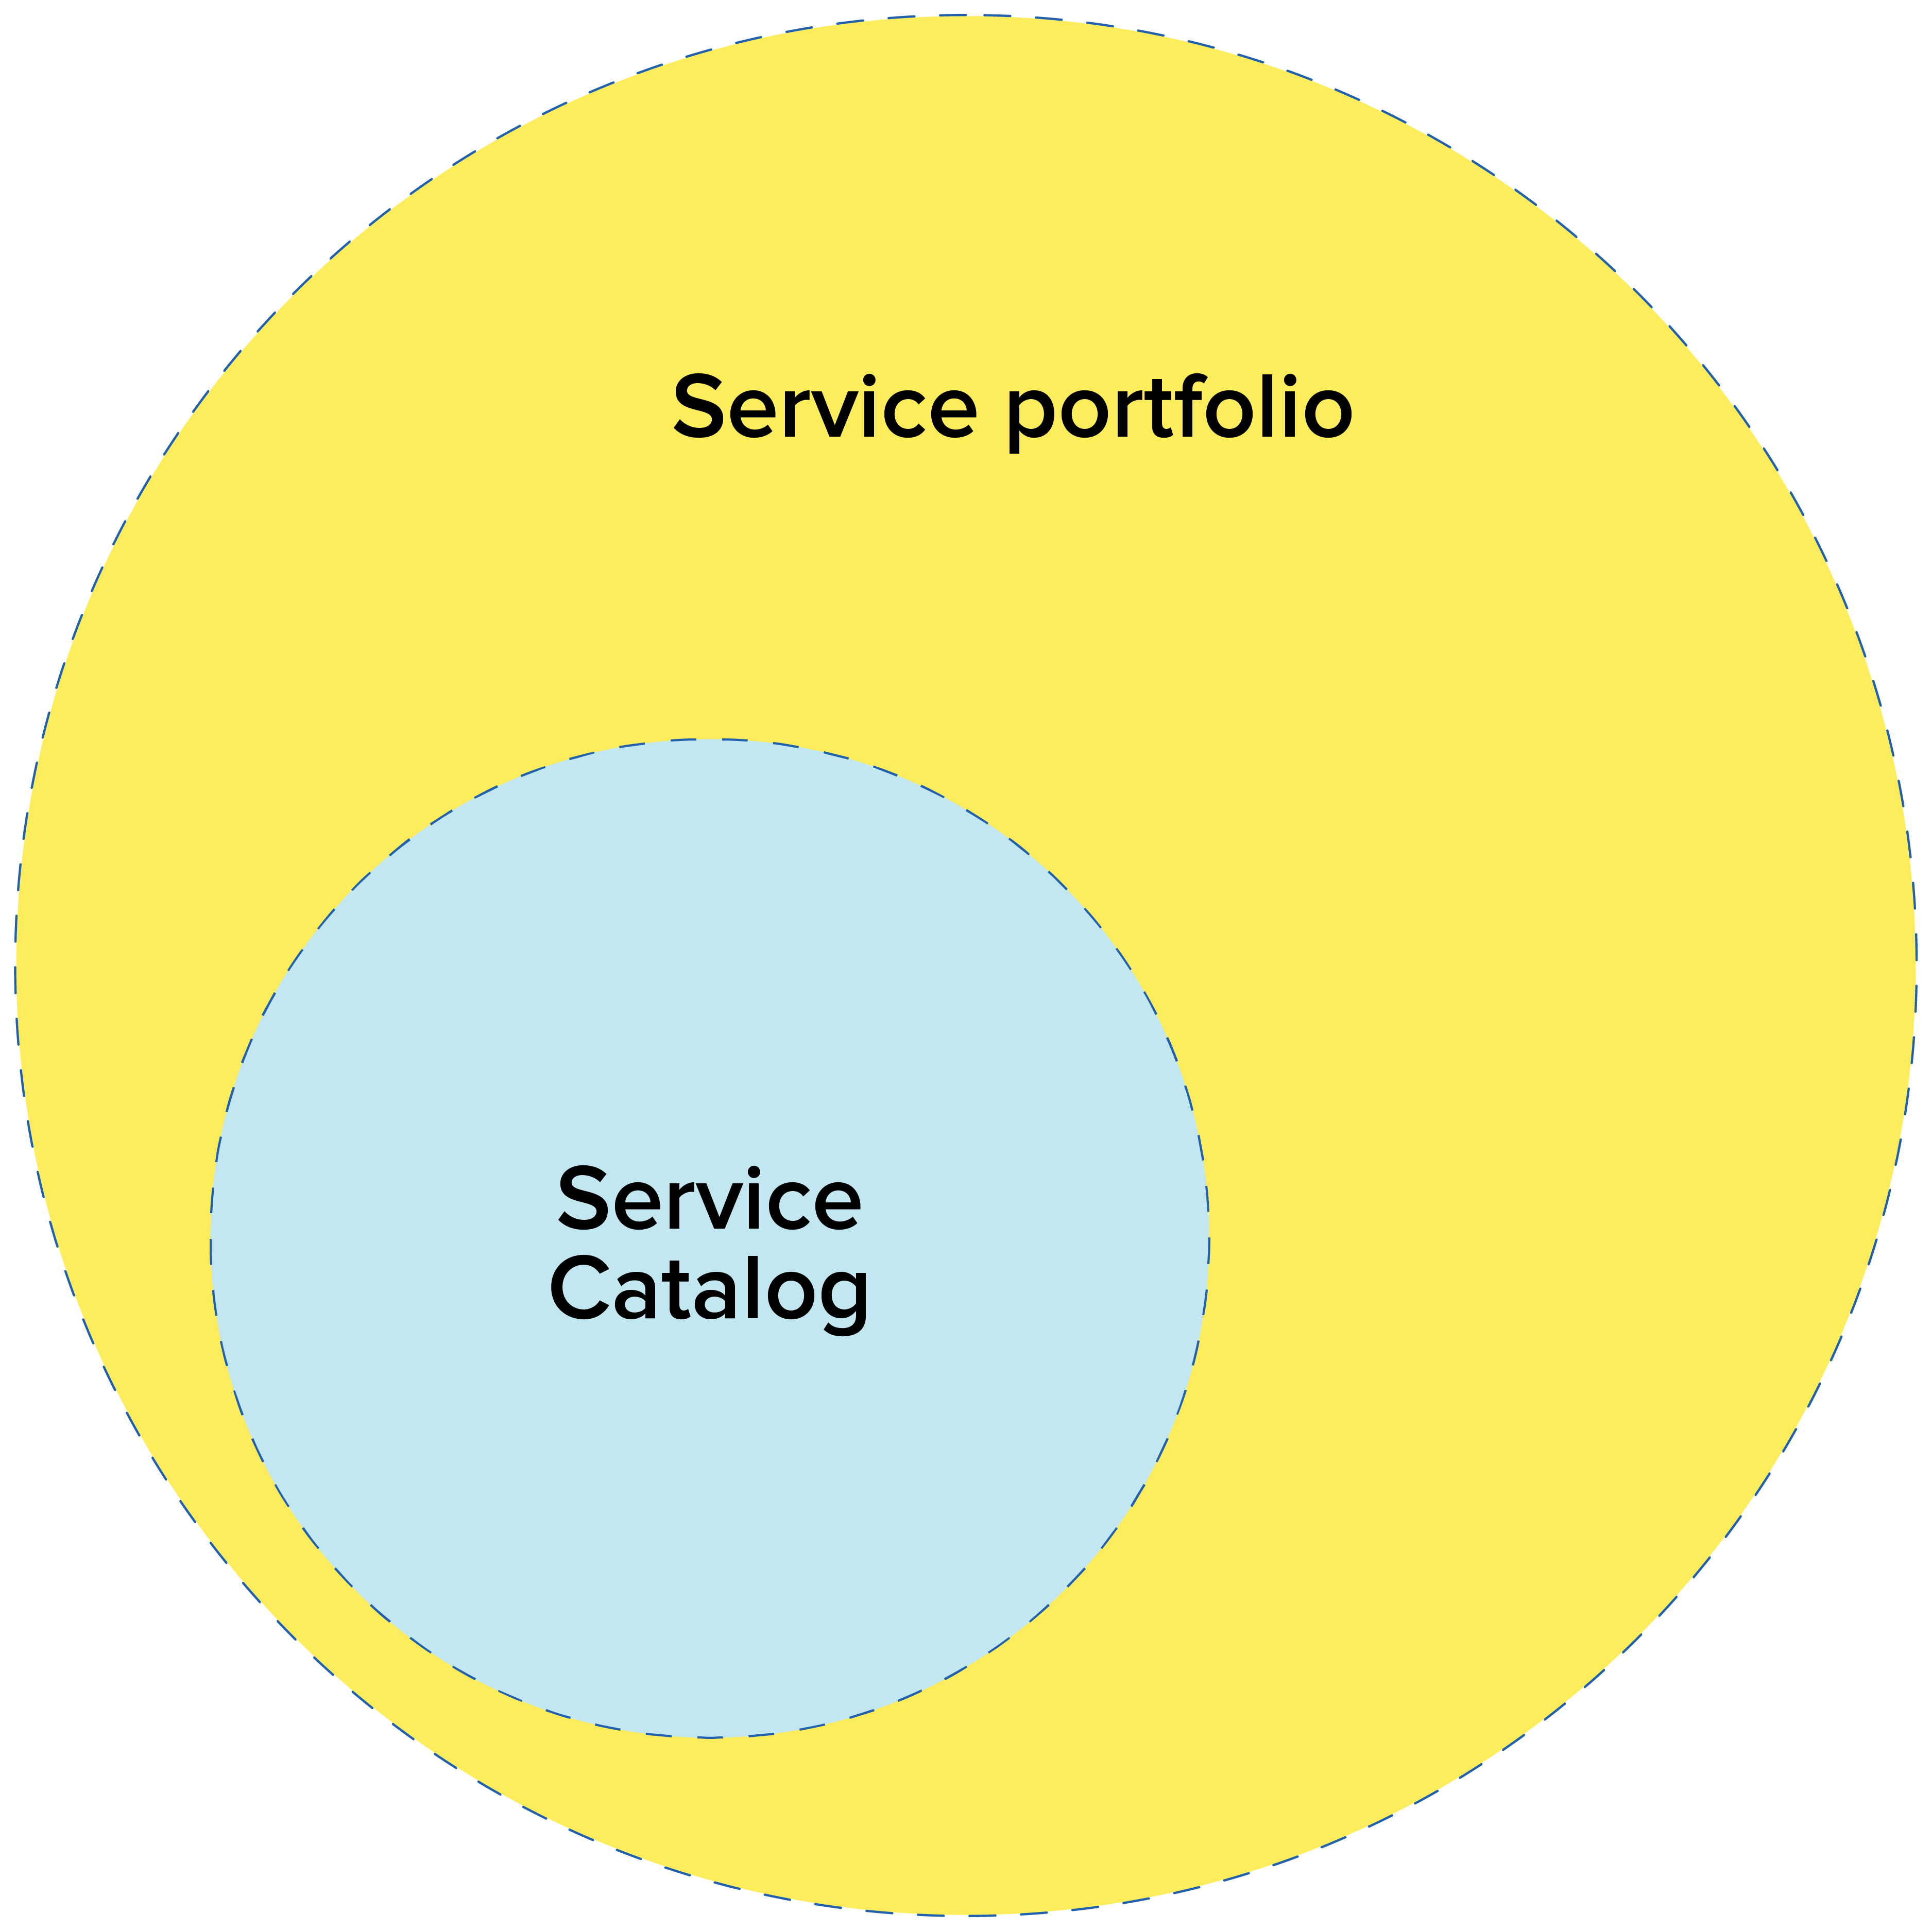 ITIL service portfolio